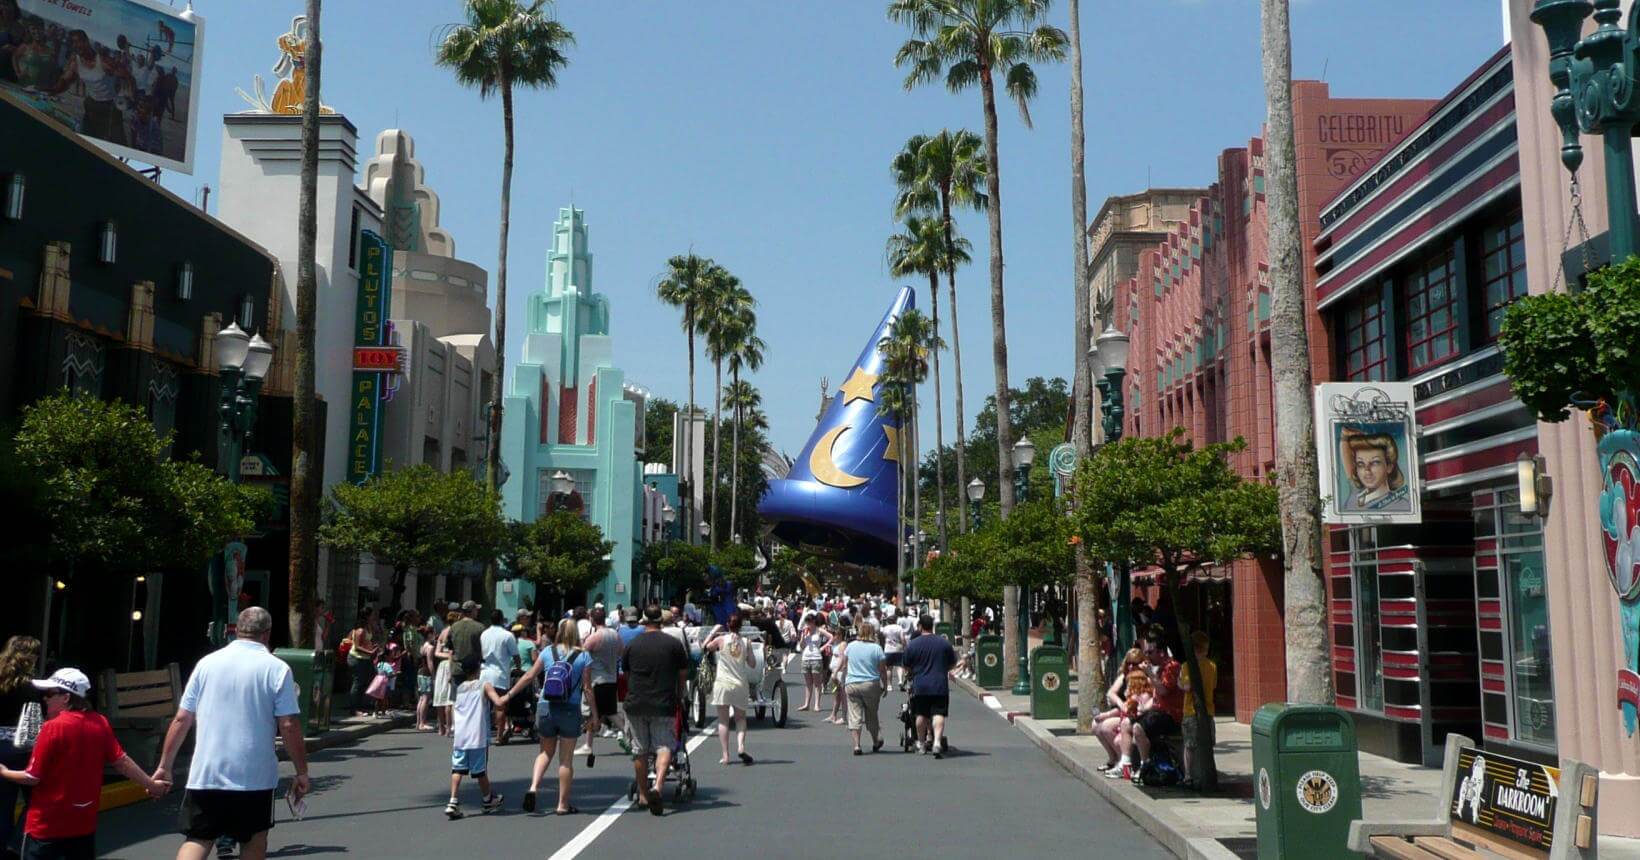 Disney's Hollywood Studio